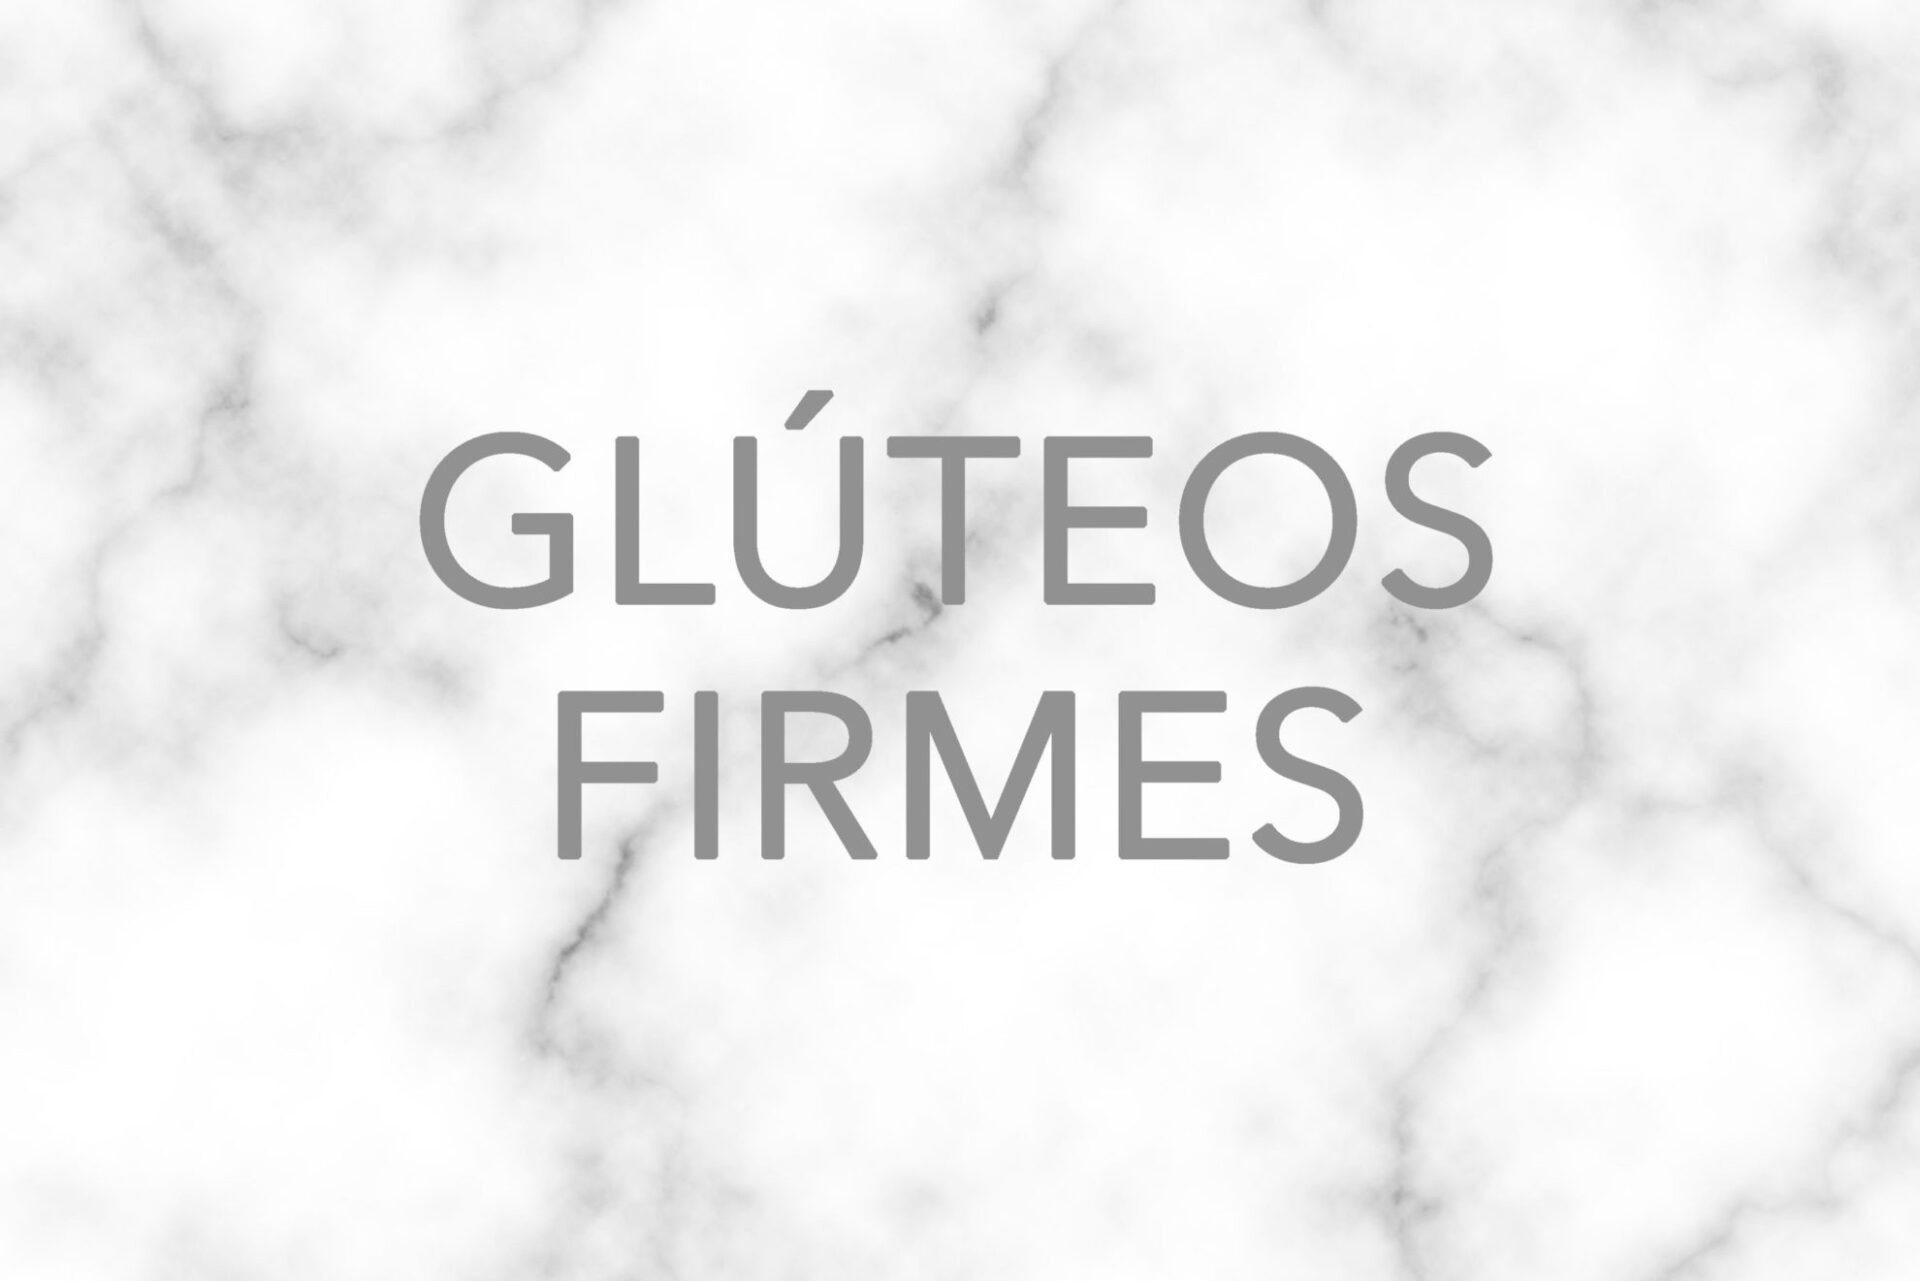 GLUTEOS FIRMES